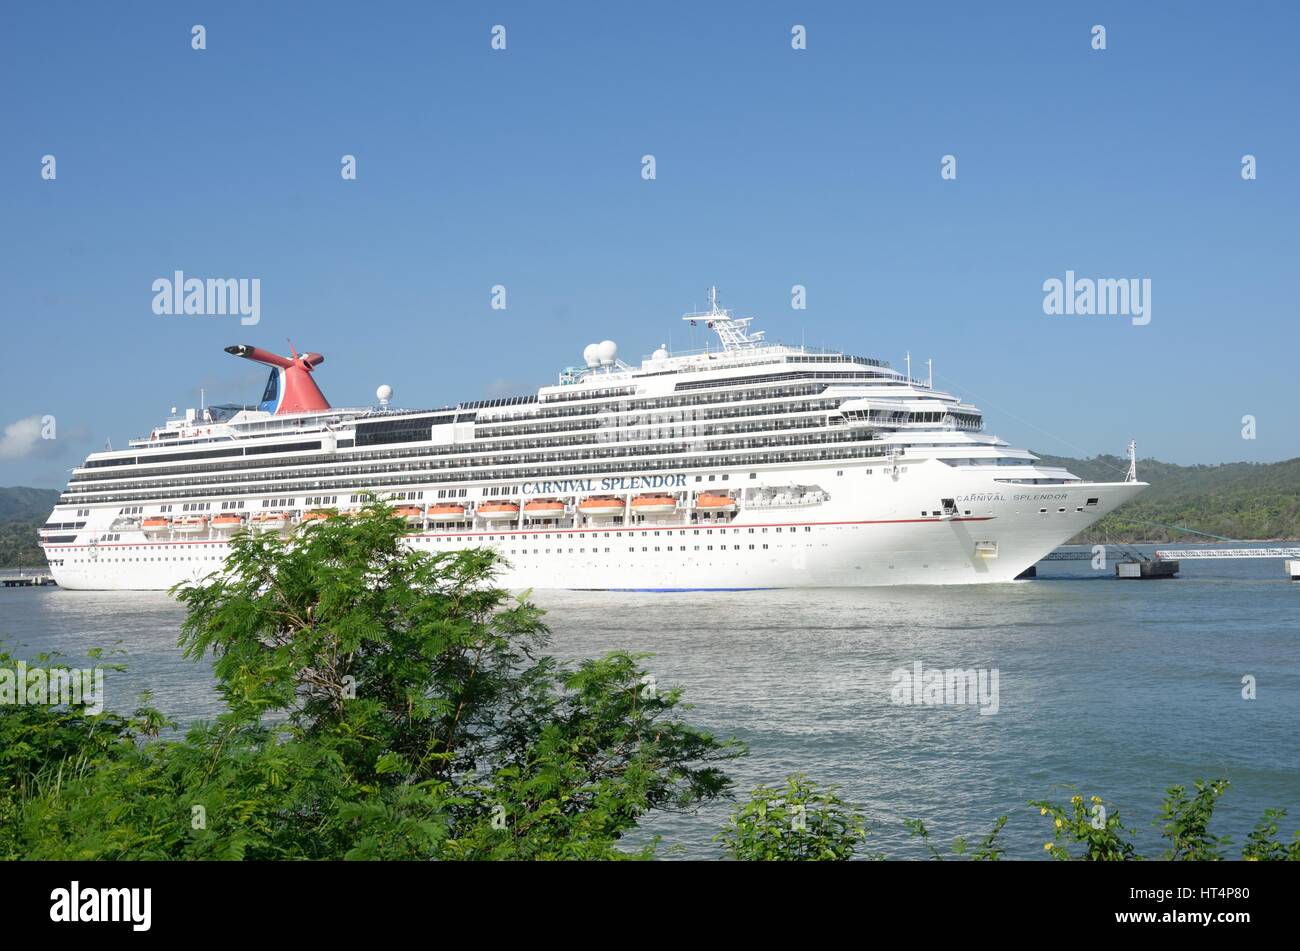 AMBER COVE DOMINICAN REPUBLIC 16 FEBRUARY  2016: Carnival Splendor Cruise ship in port Stock Photo